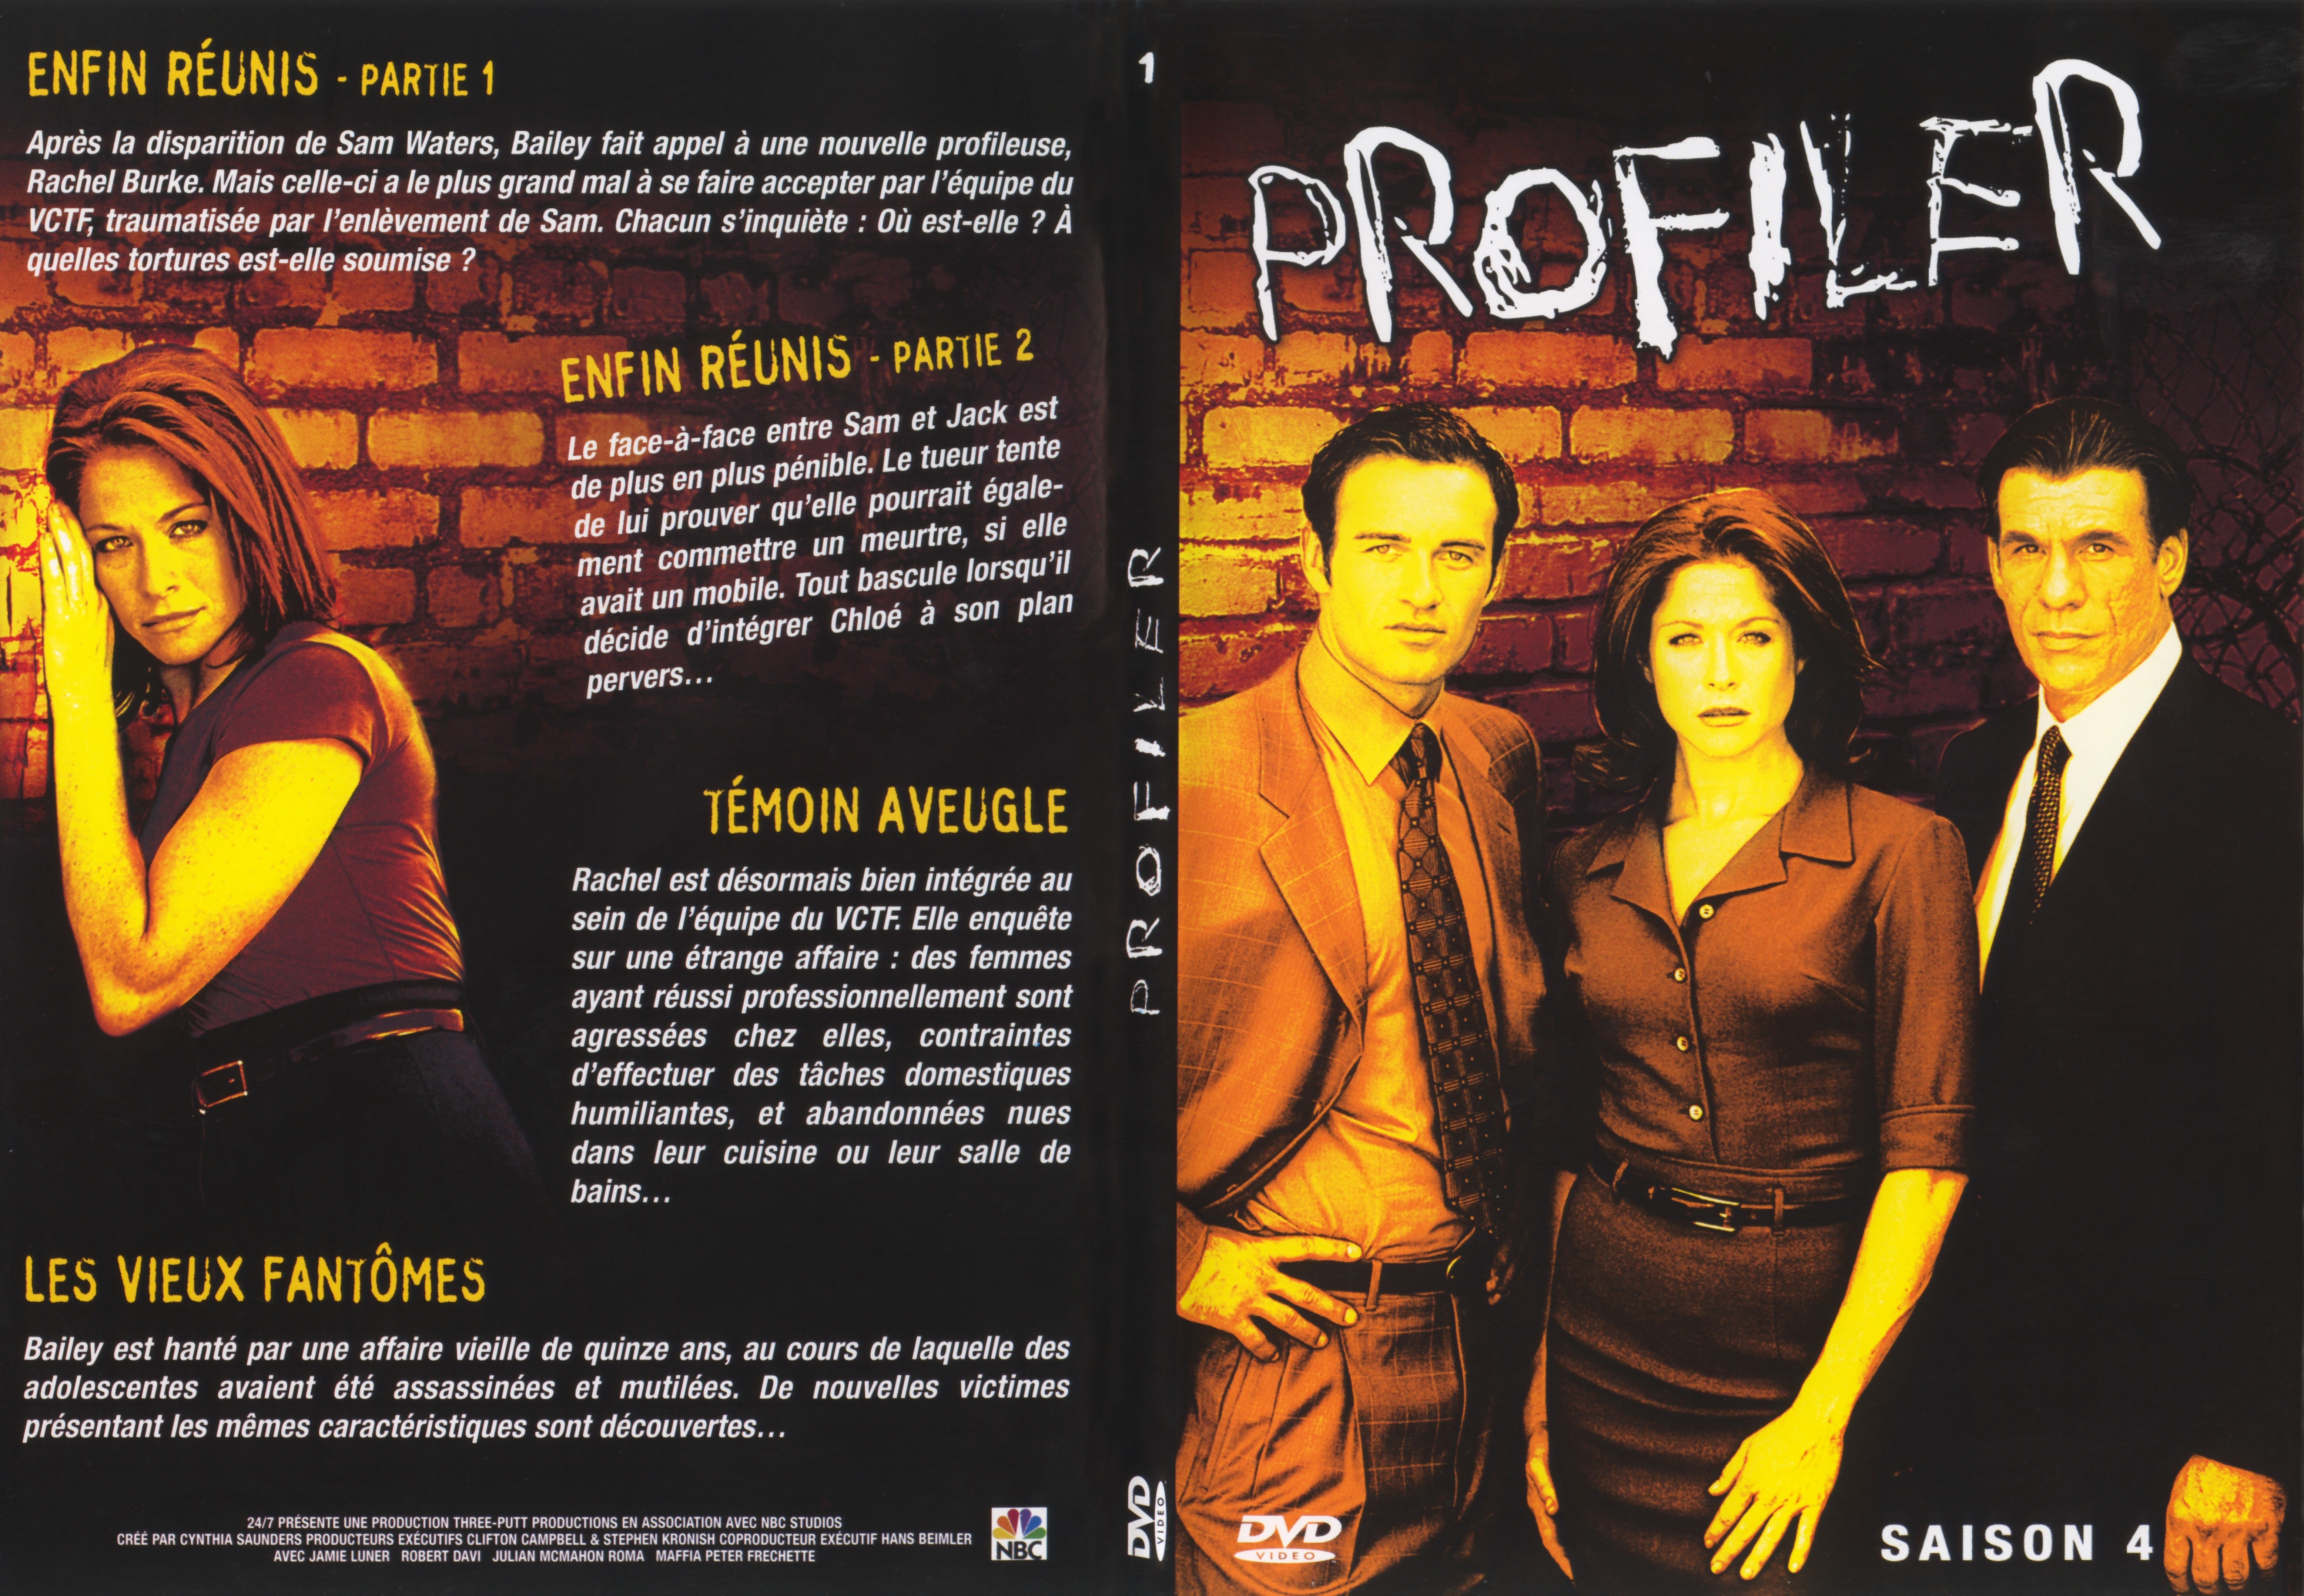 Jaquette DVD Profiler saison 4 DVD 1